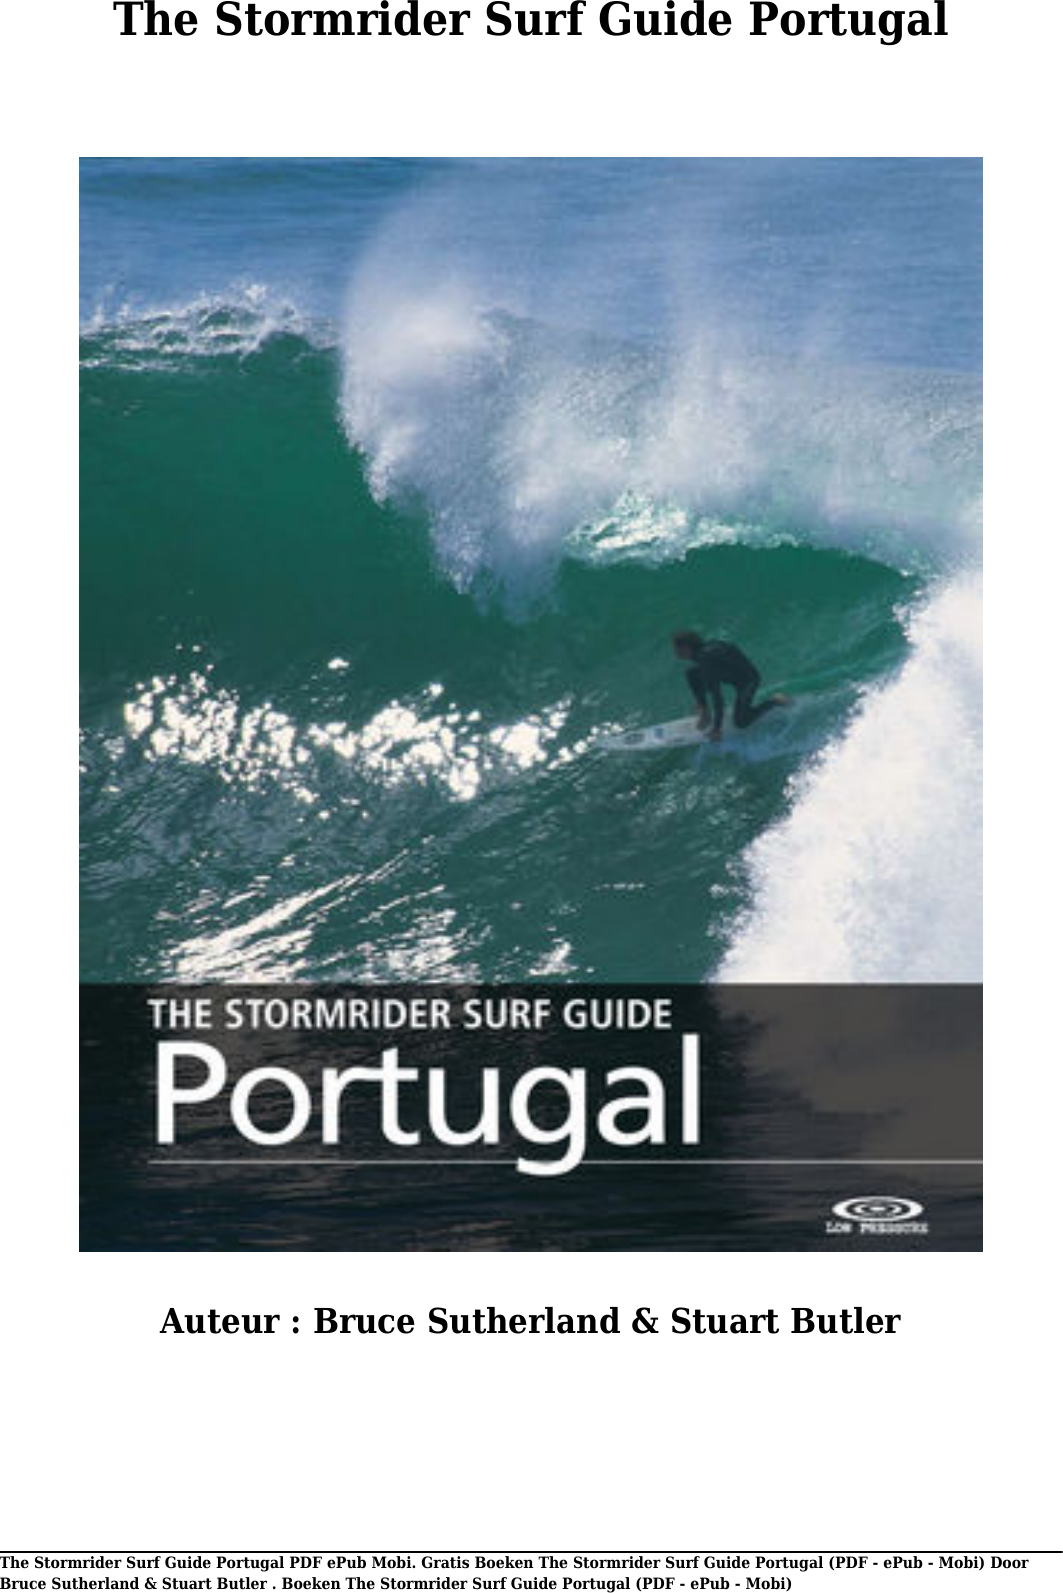 Page 1 of 11 - Gratis Boeken The Stormrider Surf Guide Portugal Van Bruce Sutherland & Stuart Butler(PDF - EPub Mobi) (PDF E Pub Door S